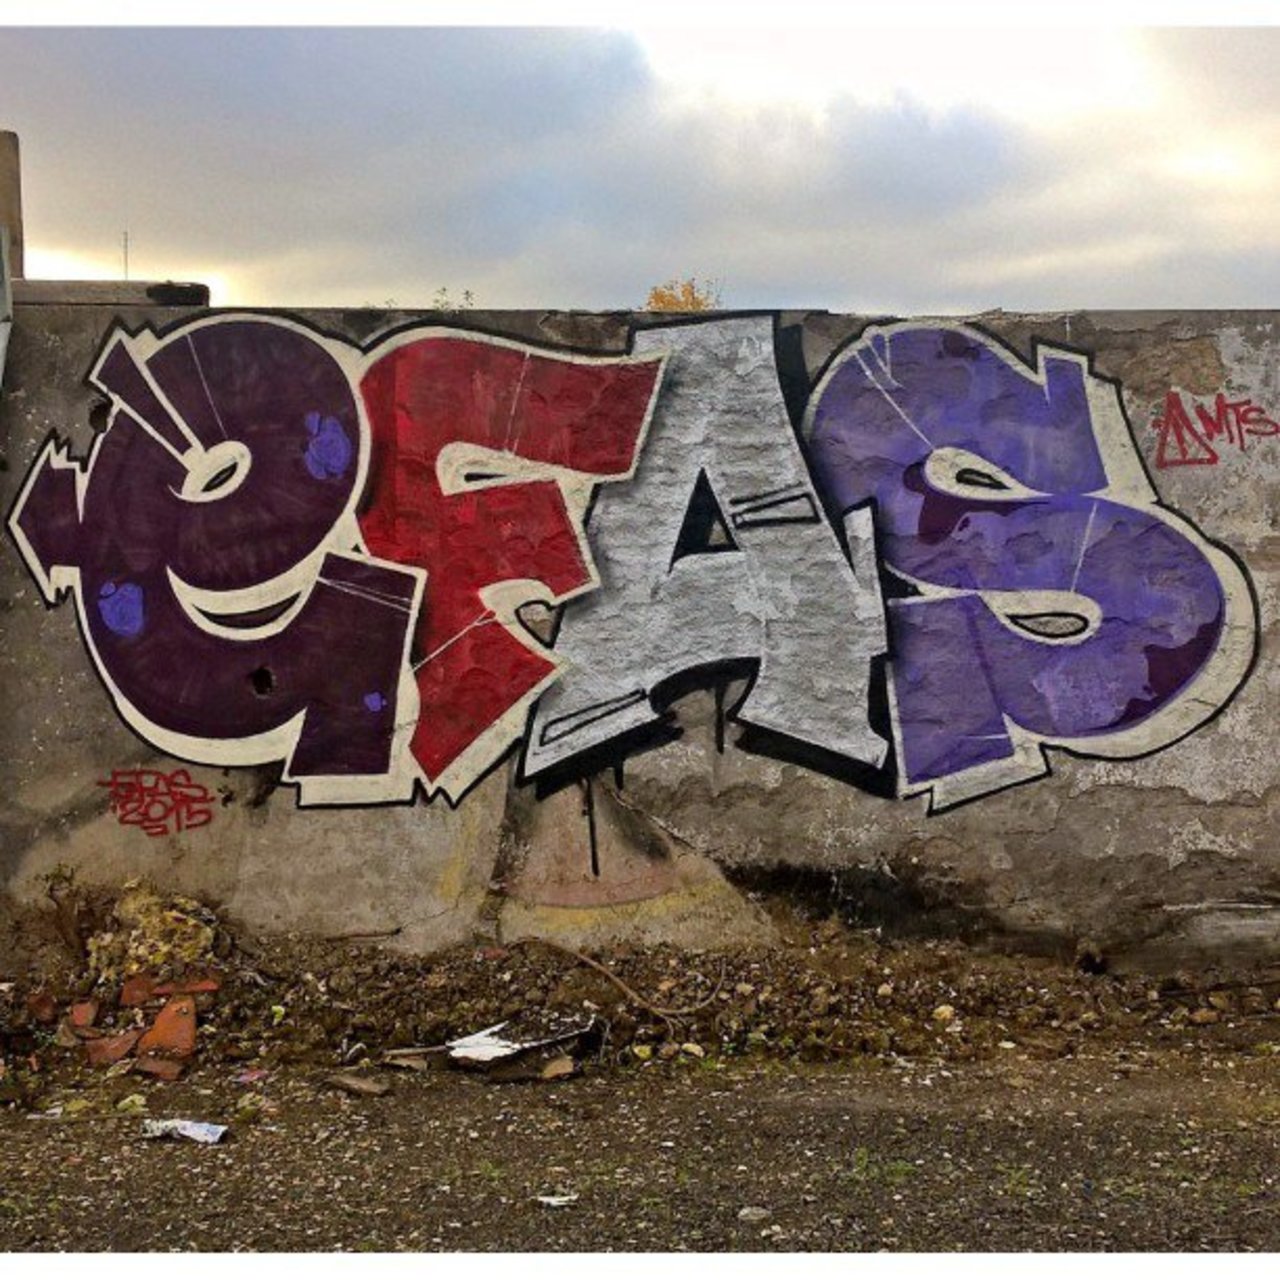 EFAS
#streetart #graffiti #graff #art #fatcap #bombing #sprayart #spraycanart #wallart #handstyle #lettering #urban… https://t.co/8UDxi4otB8